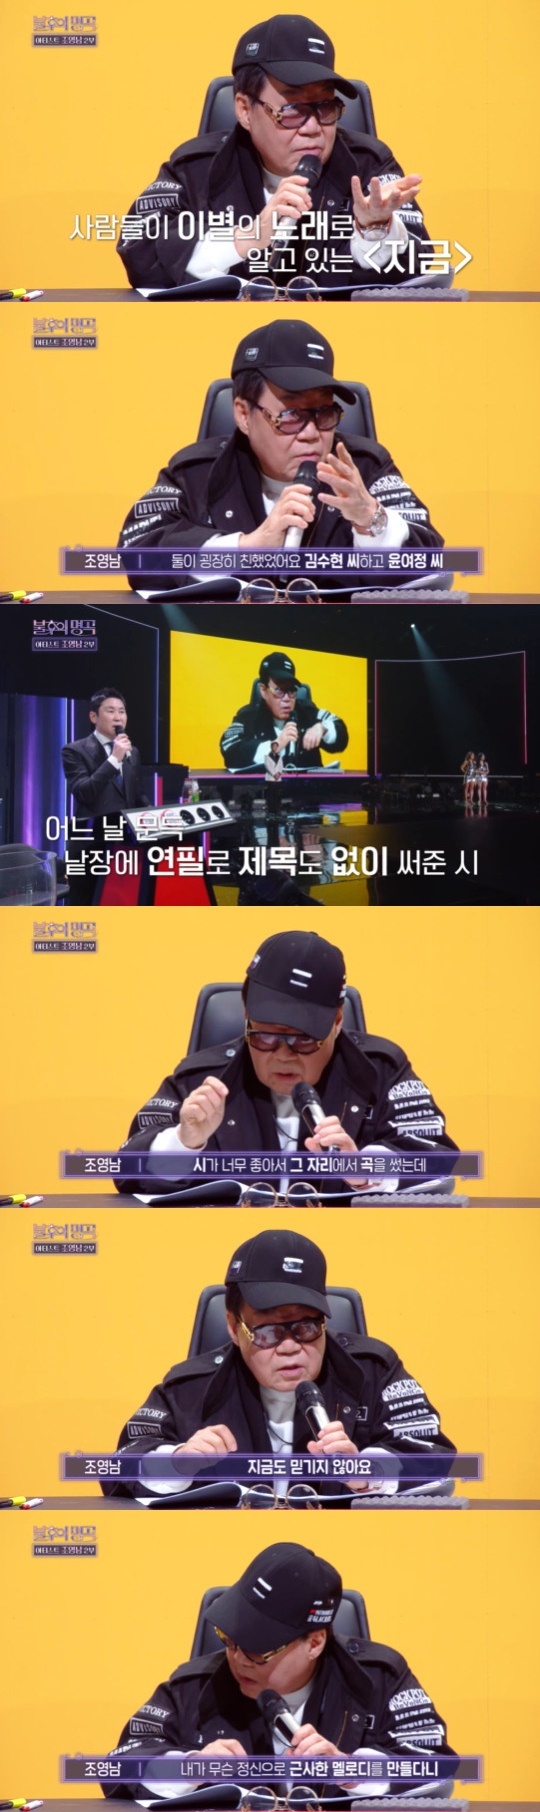 KBS 2TV '불후의 명곡 전설을 노래하다' 방송 화면 캡처